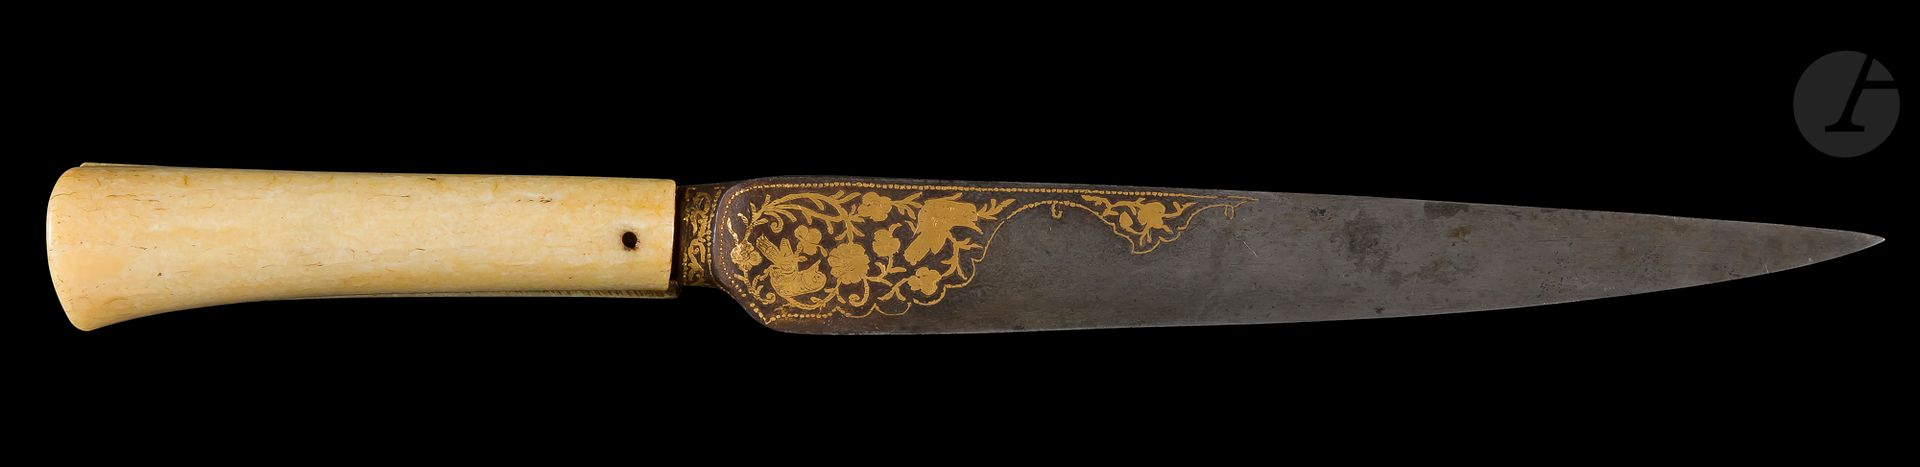 Null Poignard kard, Inde ou Iran qâjâr, XIXe siècle
Lame droite à un tranchant e&hellip;